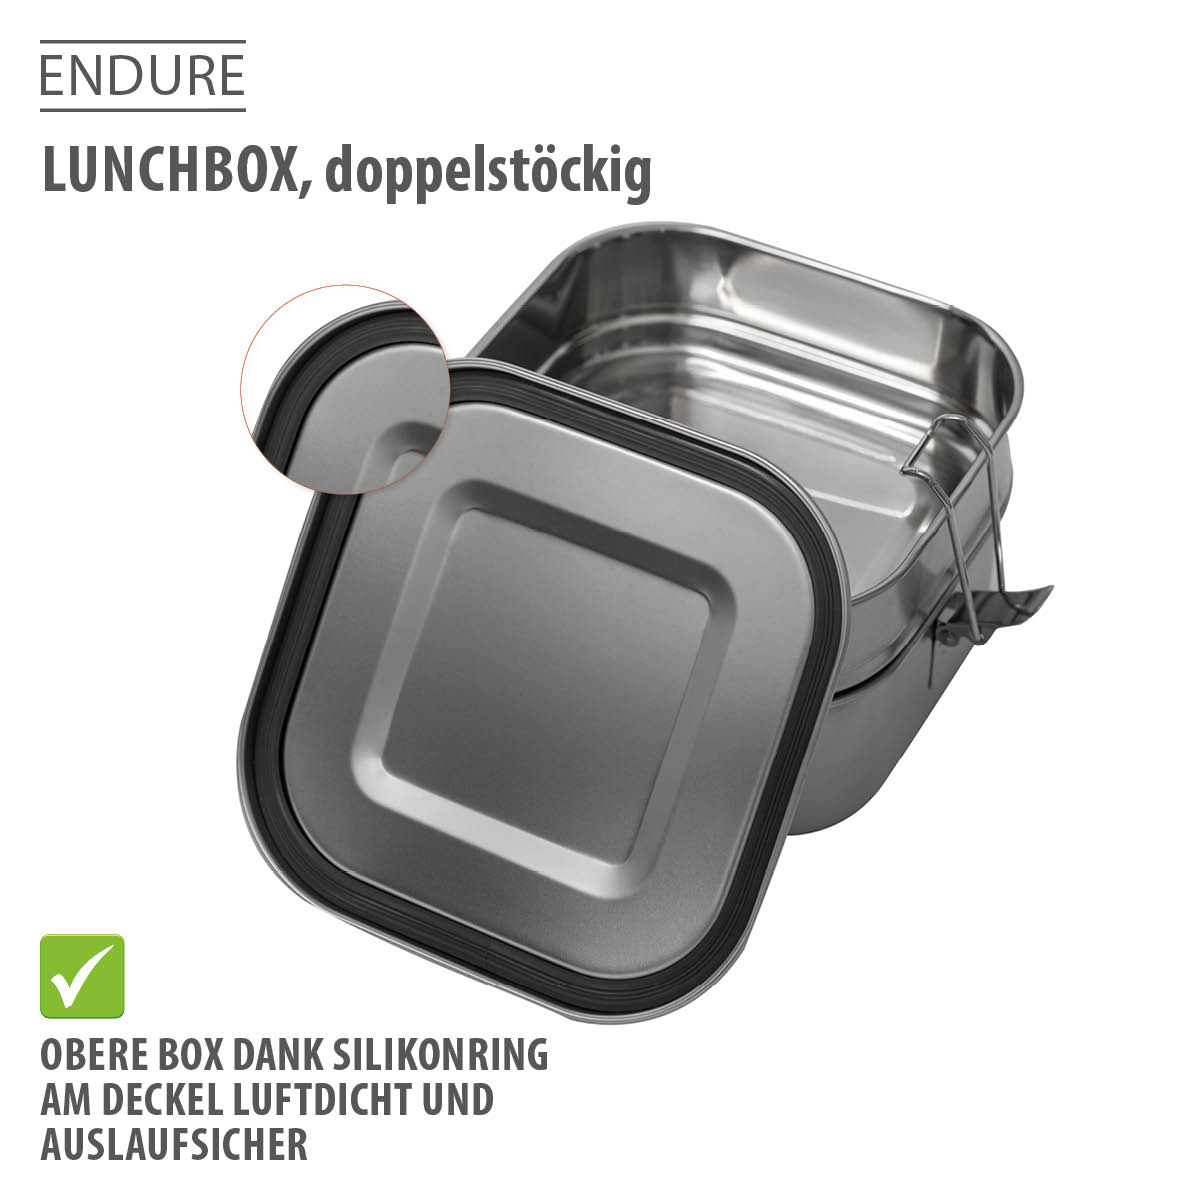 Lunchbox ENDURE, doppelstöckig